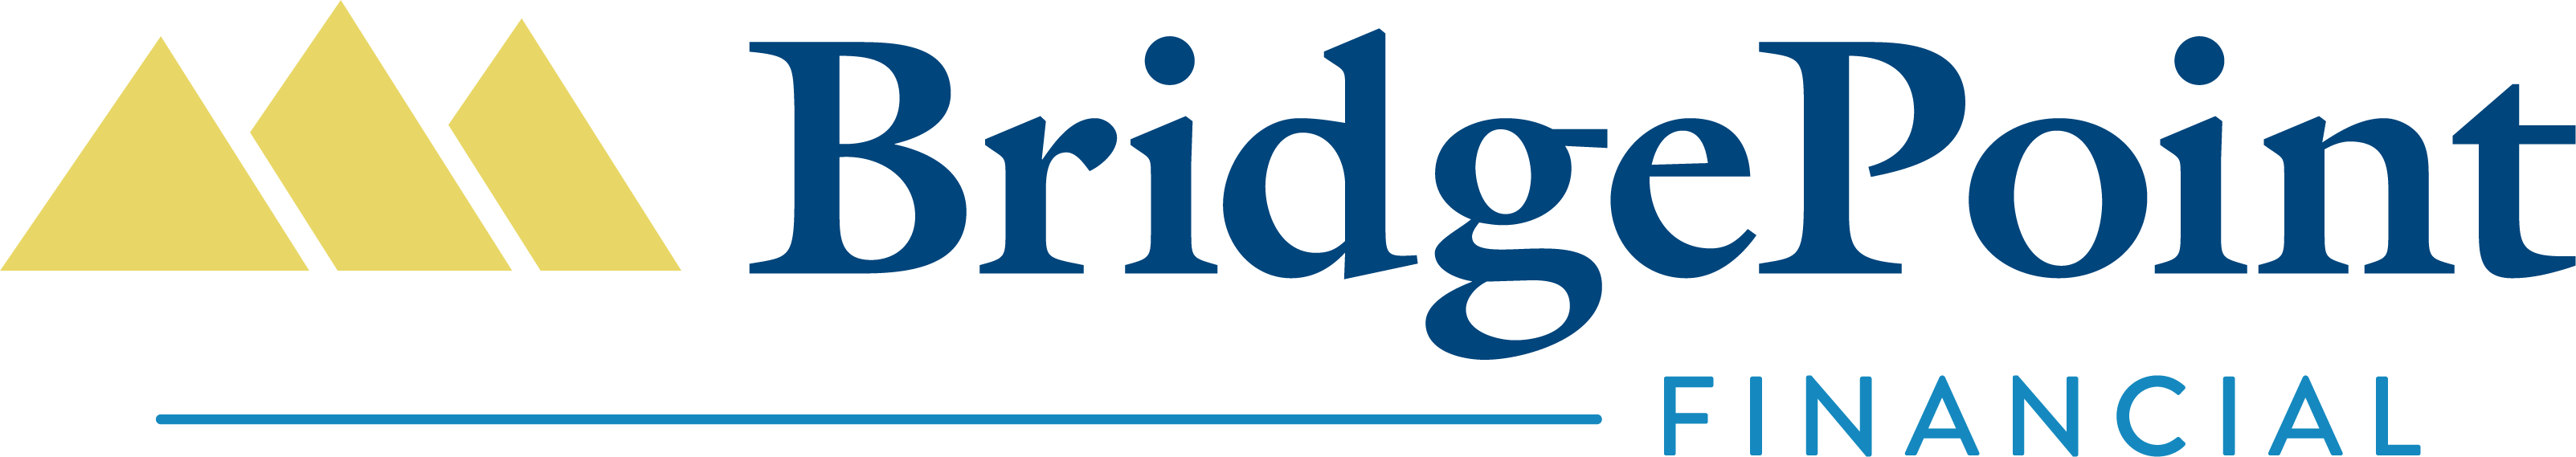 BridgePoint Financial - Silver Sponsor